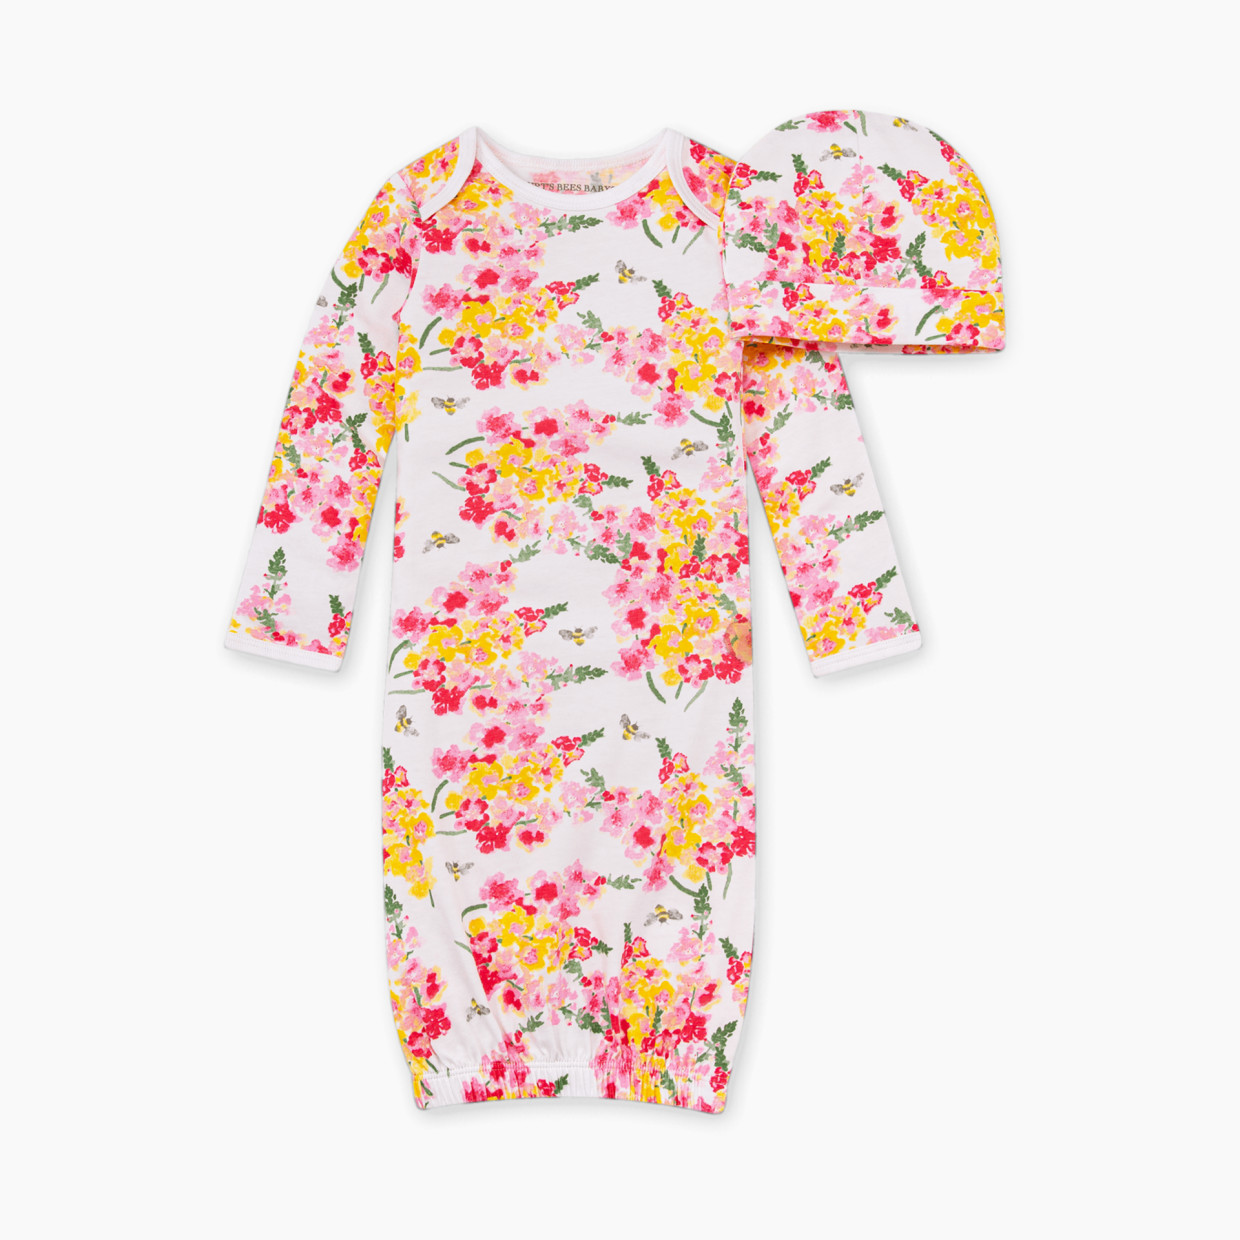 Burt's Bees Baby Newborn Gown & Cap Set, 100% Organic Cotton - Peony Paradise, One Size.